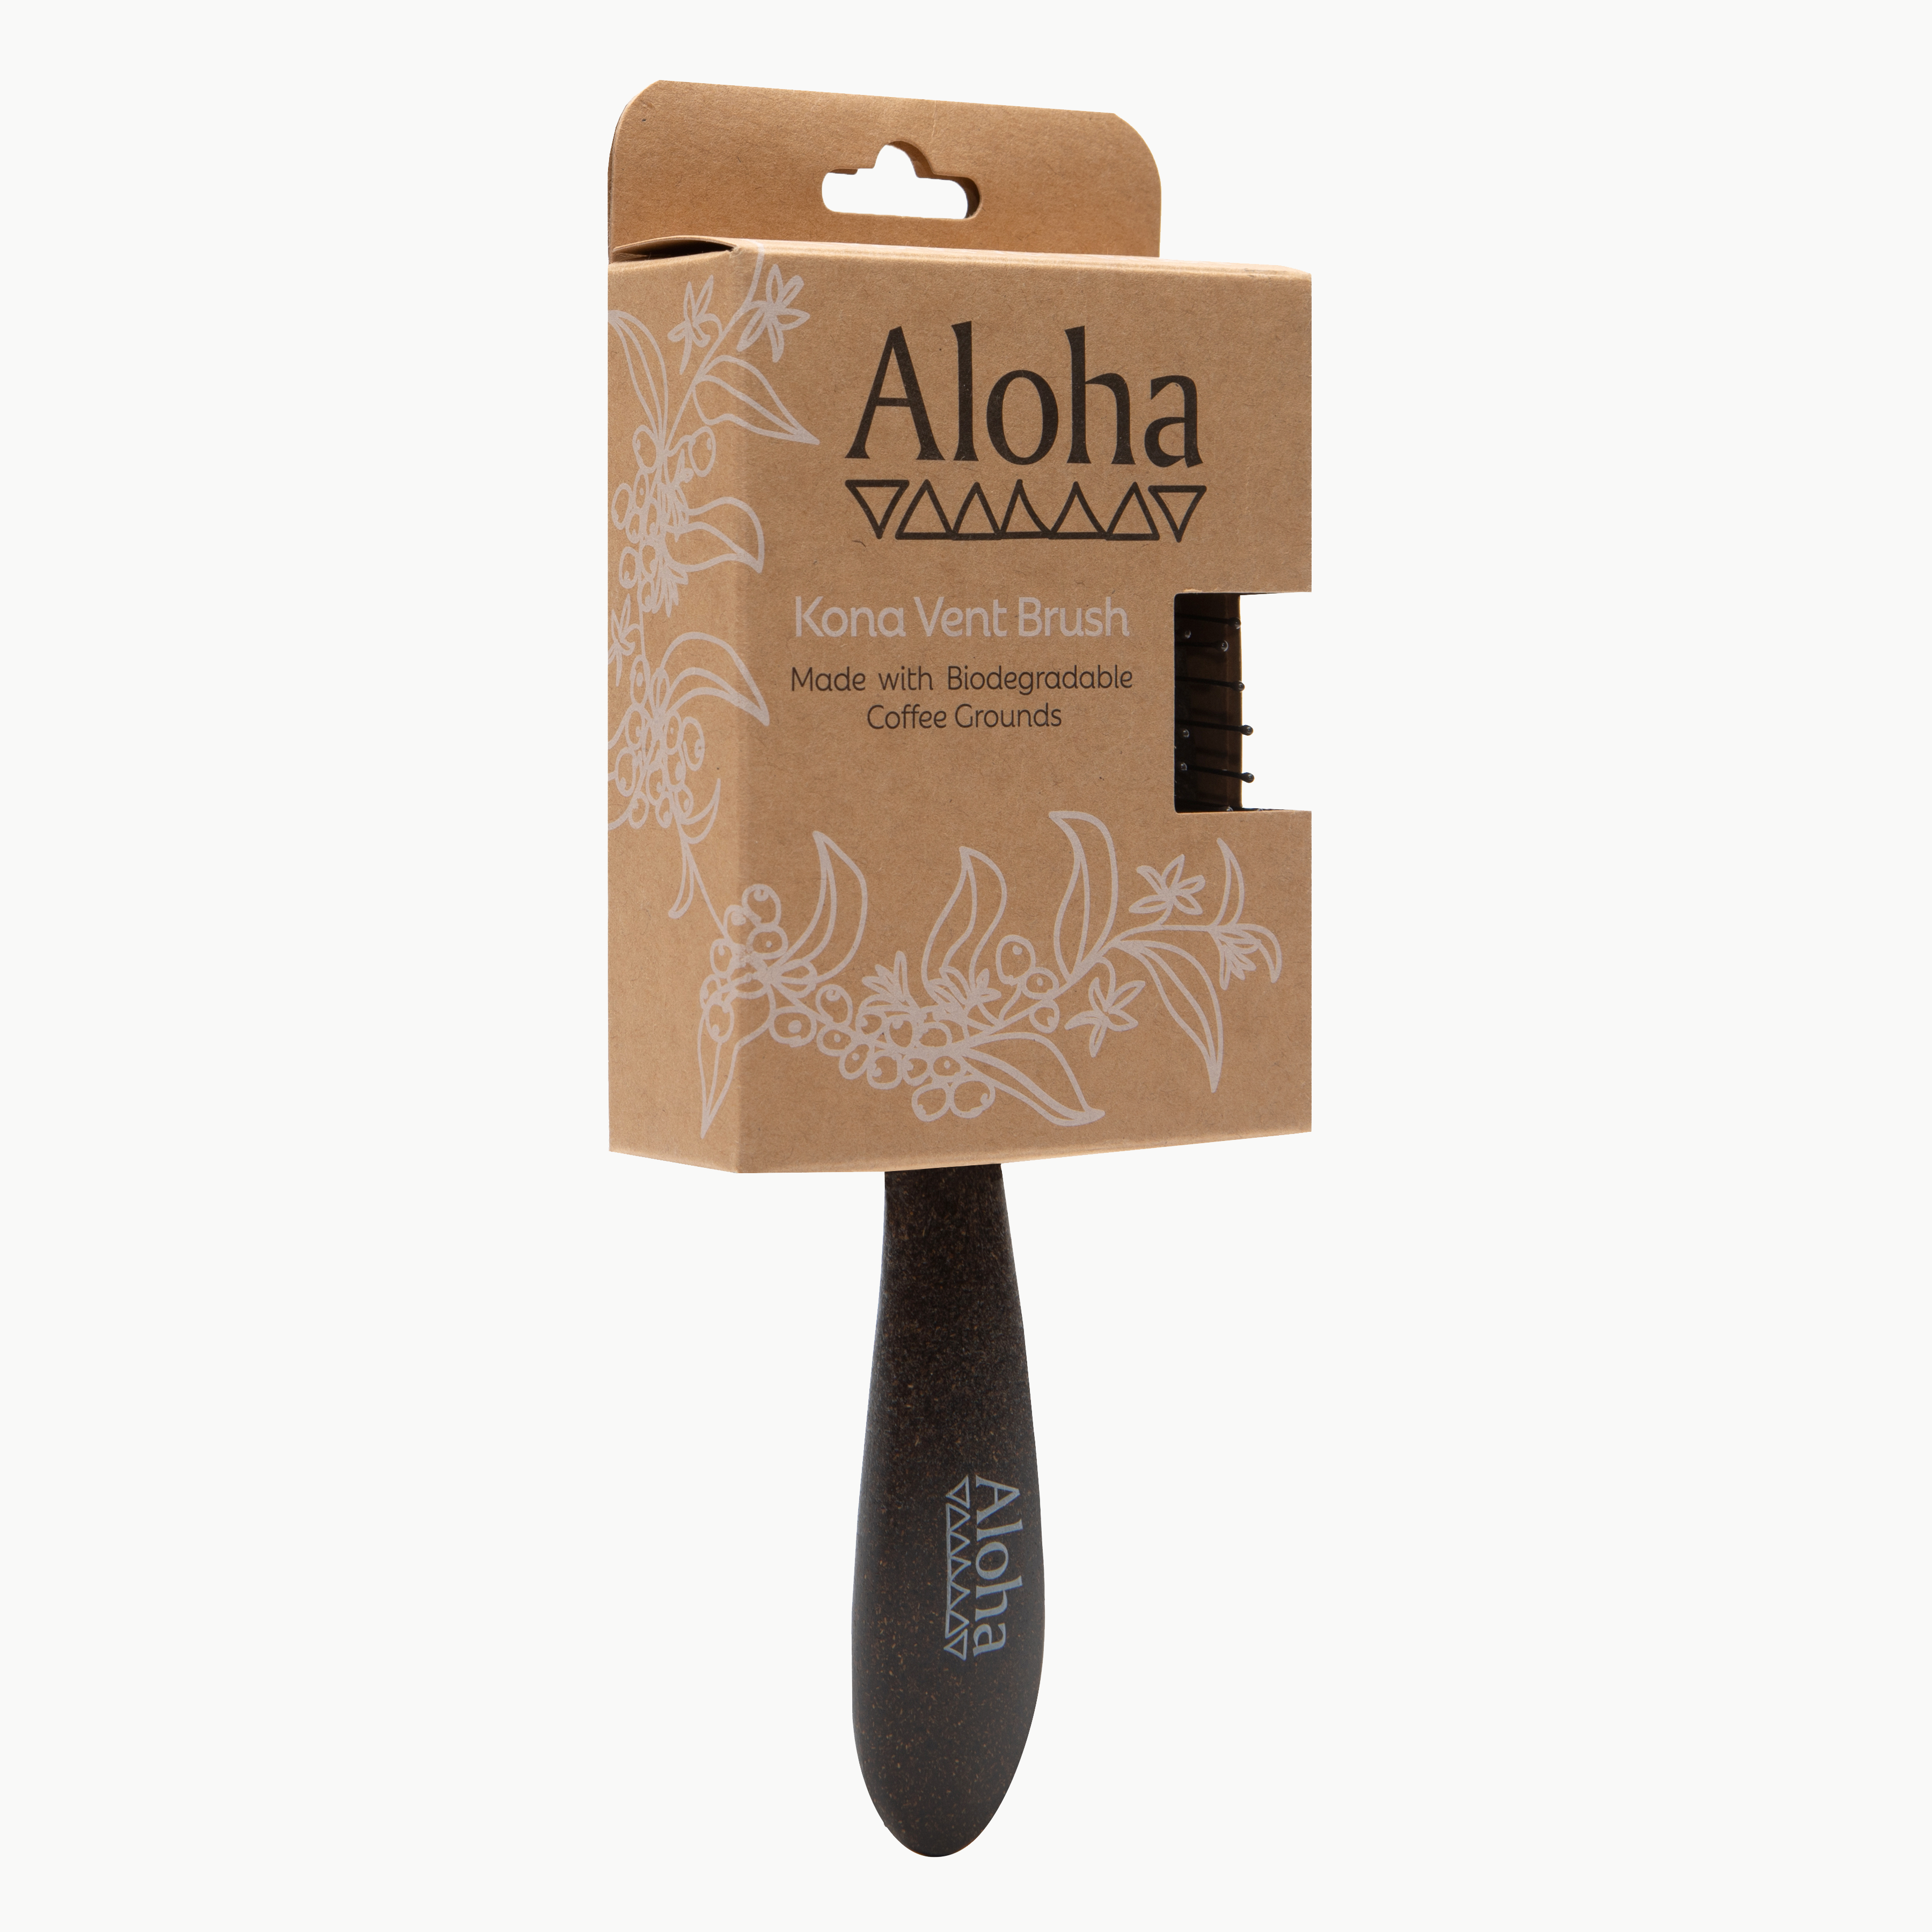 Aloha KV1 Kona Vent Brush